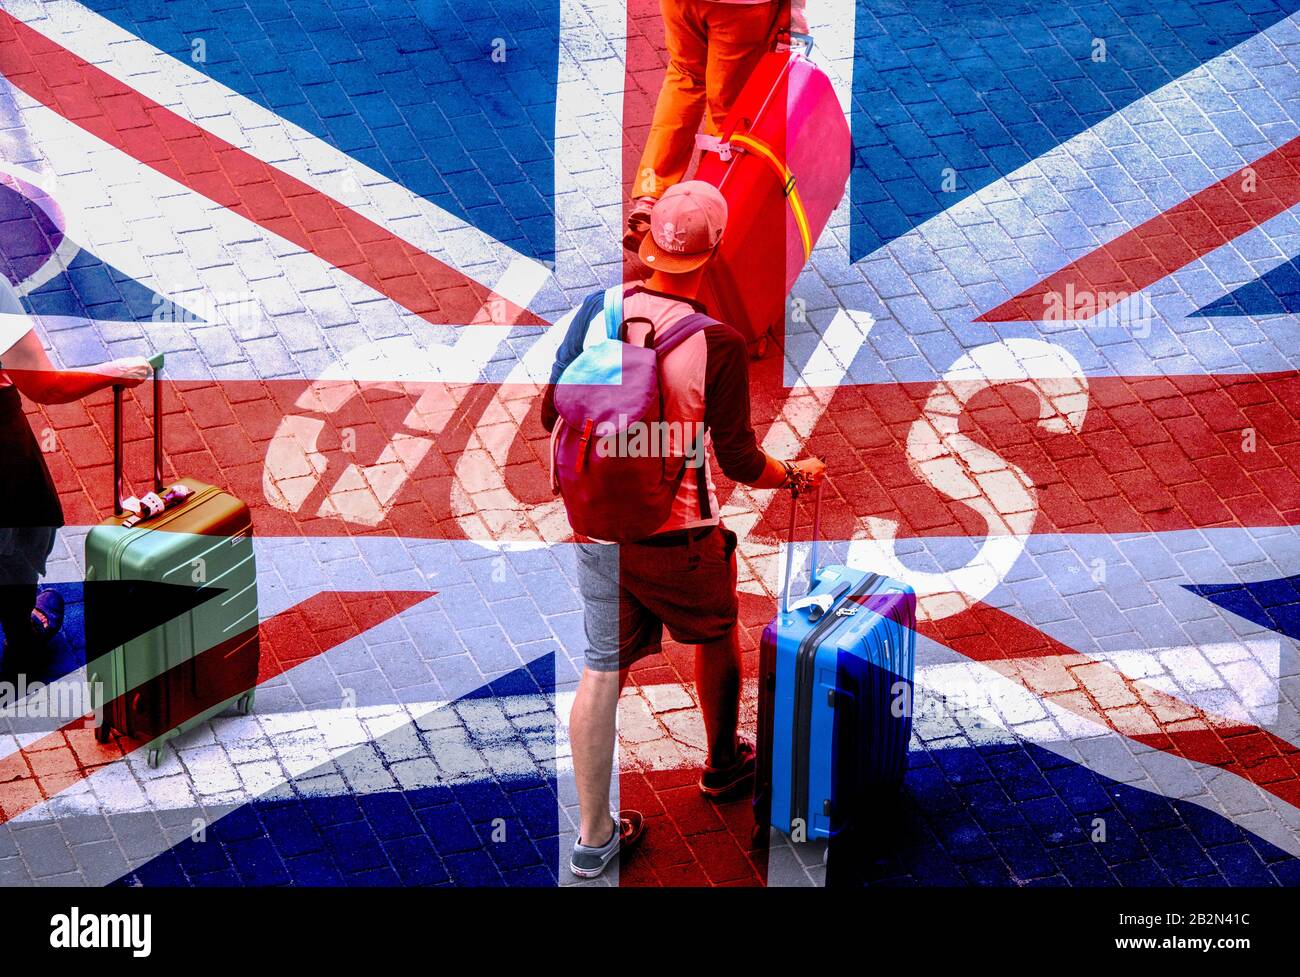 Tourists wheeling luggage over stop sign painted on road. UK flag overlayed.Coronavirus, Brexit, travel, tourism..., concept image. Stock Photo